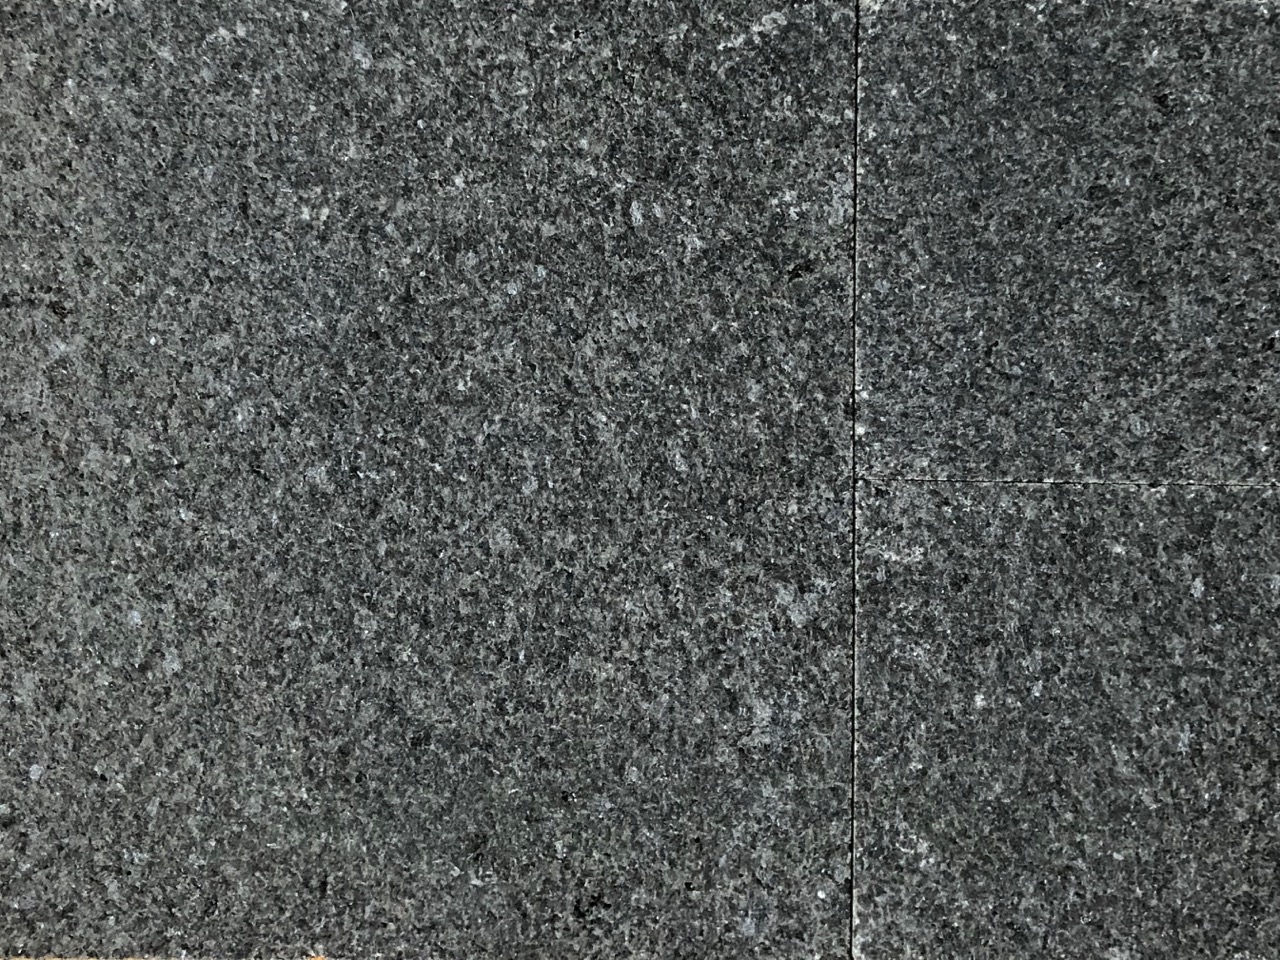 Black Granite Flamed 800x400mm Pack 20mm 17.5m² – Infinite Paving